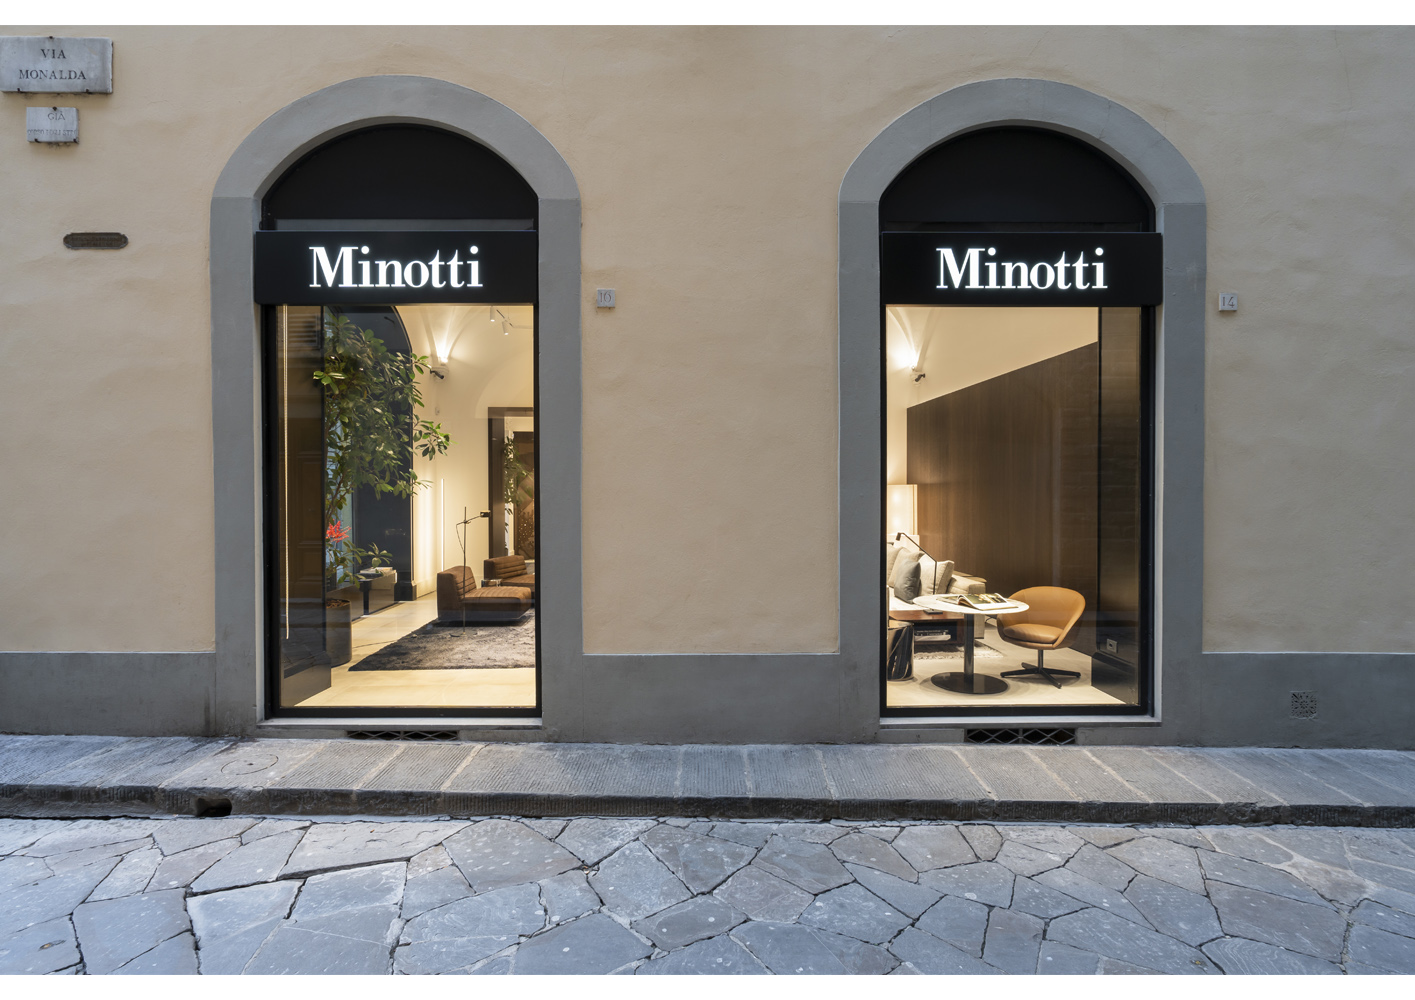 Minotti Firenze by Belvedere